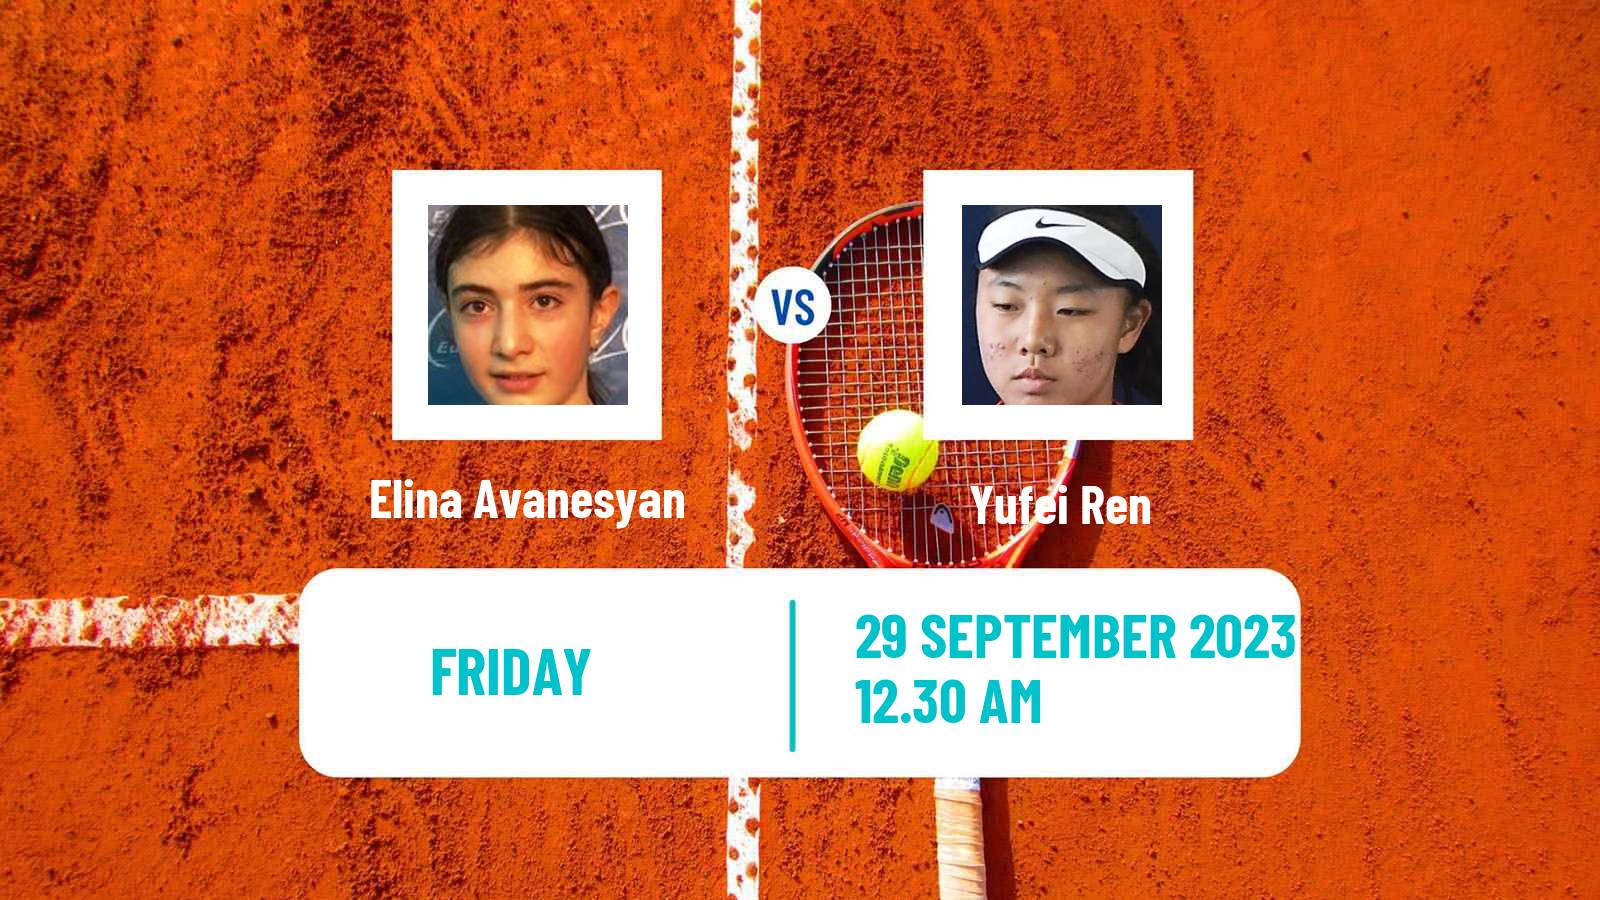 Tennis WTA Beijing Elina Avanesyan - Yufei Ren